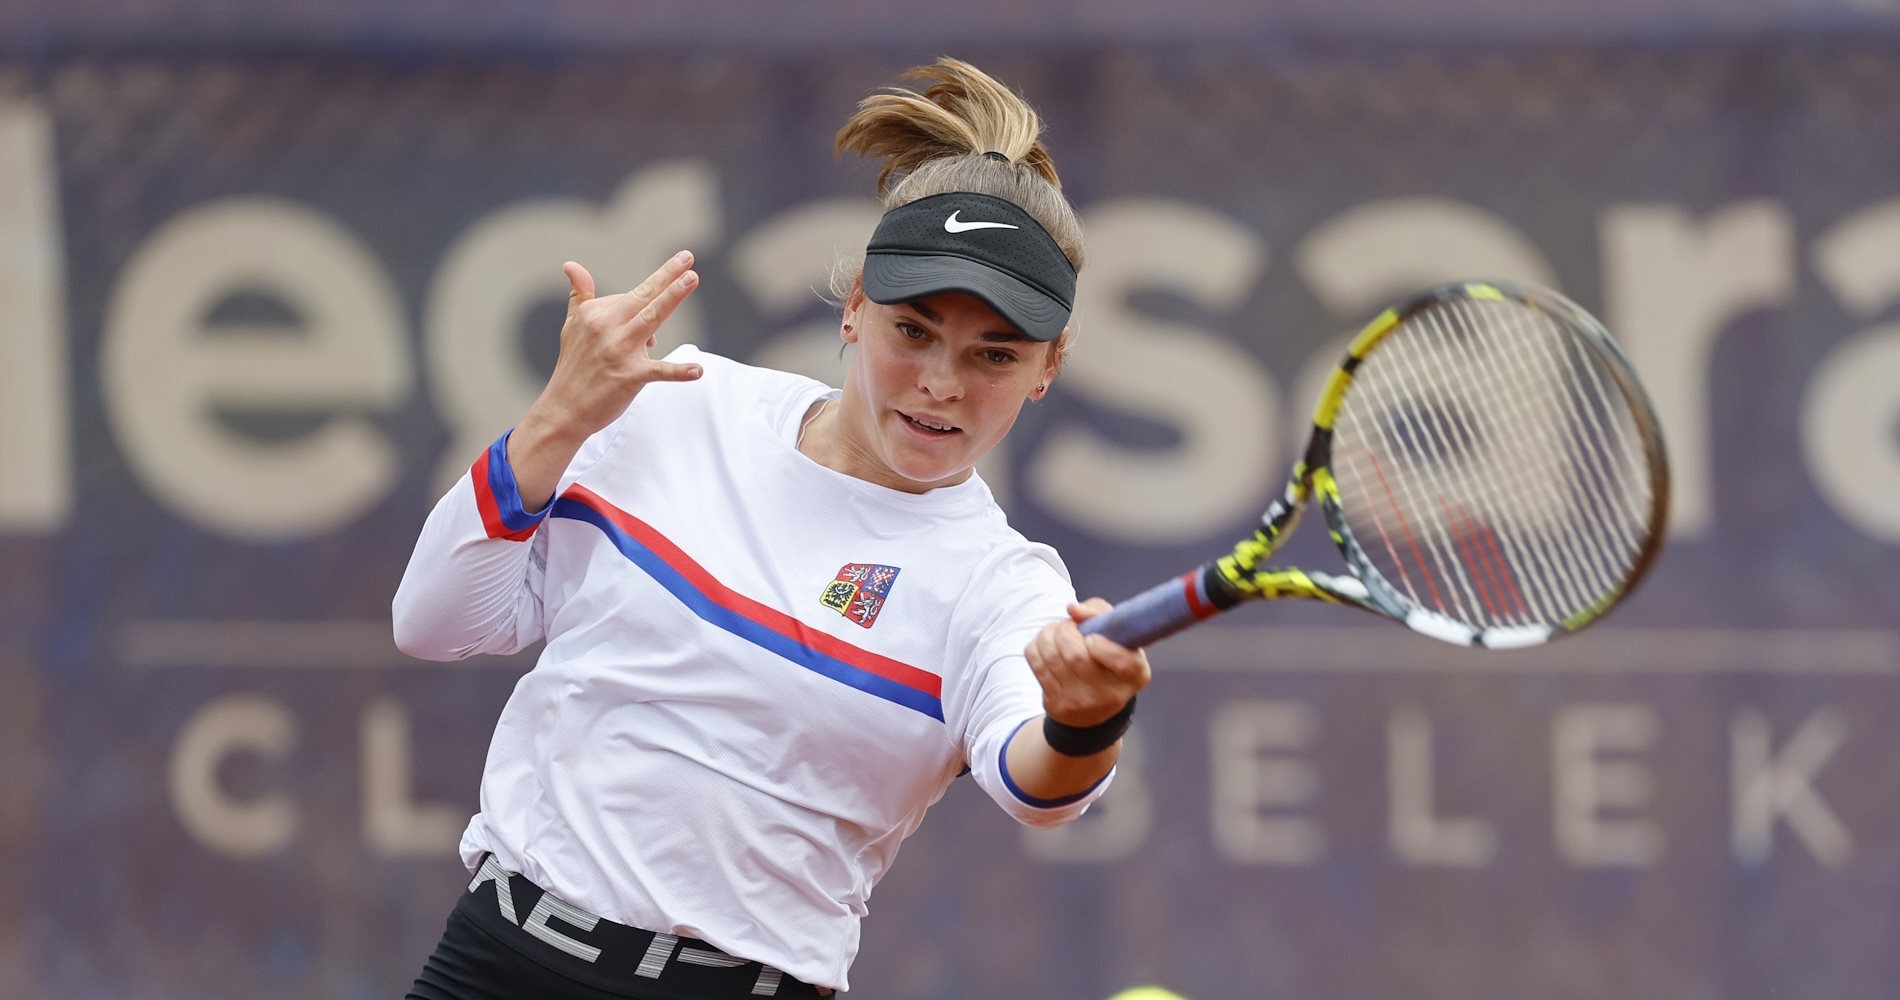 Tennis, WTA – Colina Open 2023: Bejlek downs Bondar - Tennis Majors